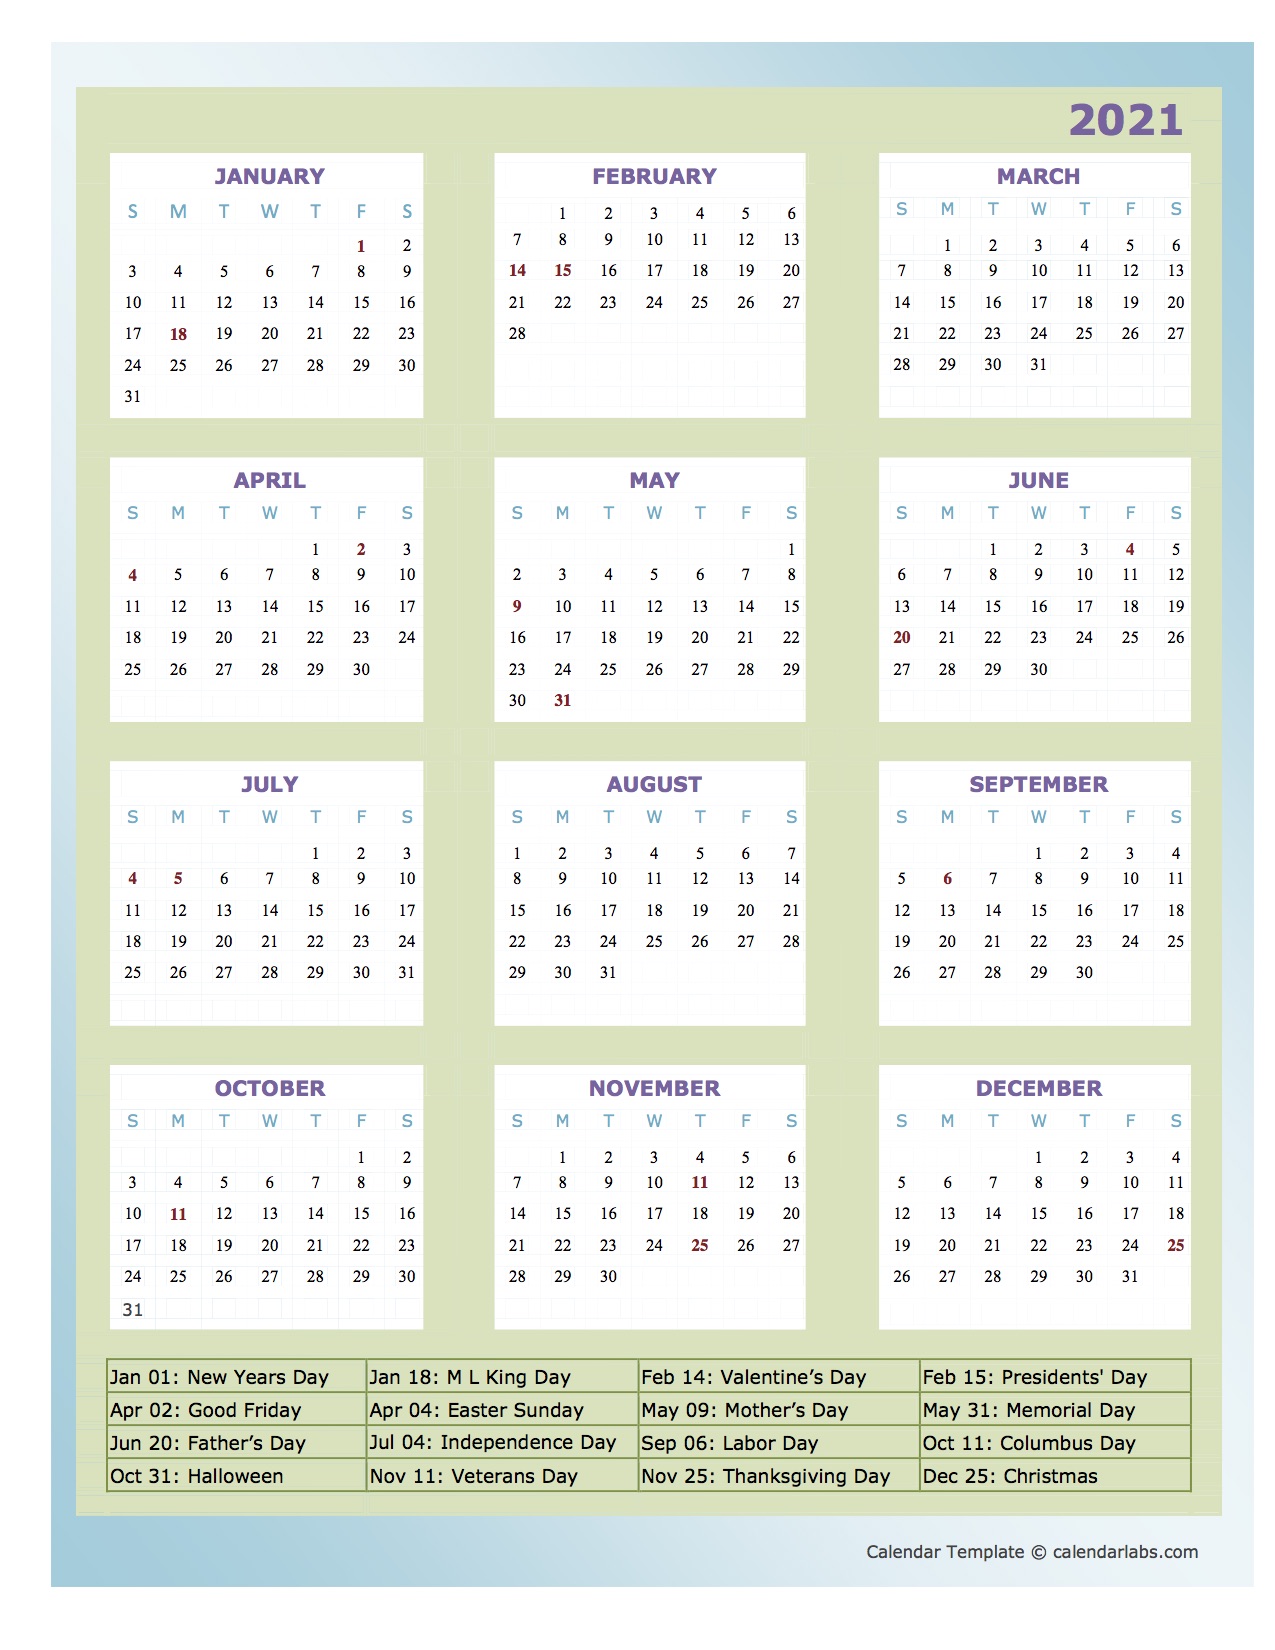 2021 Annual Calendar Design Template - Free Printable ...